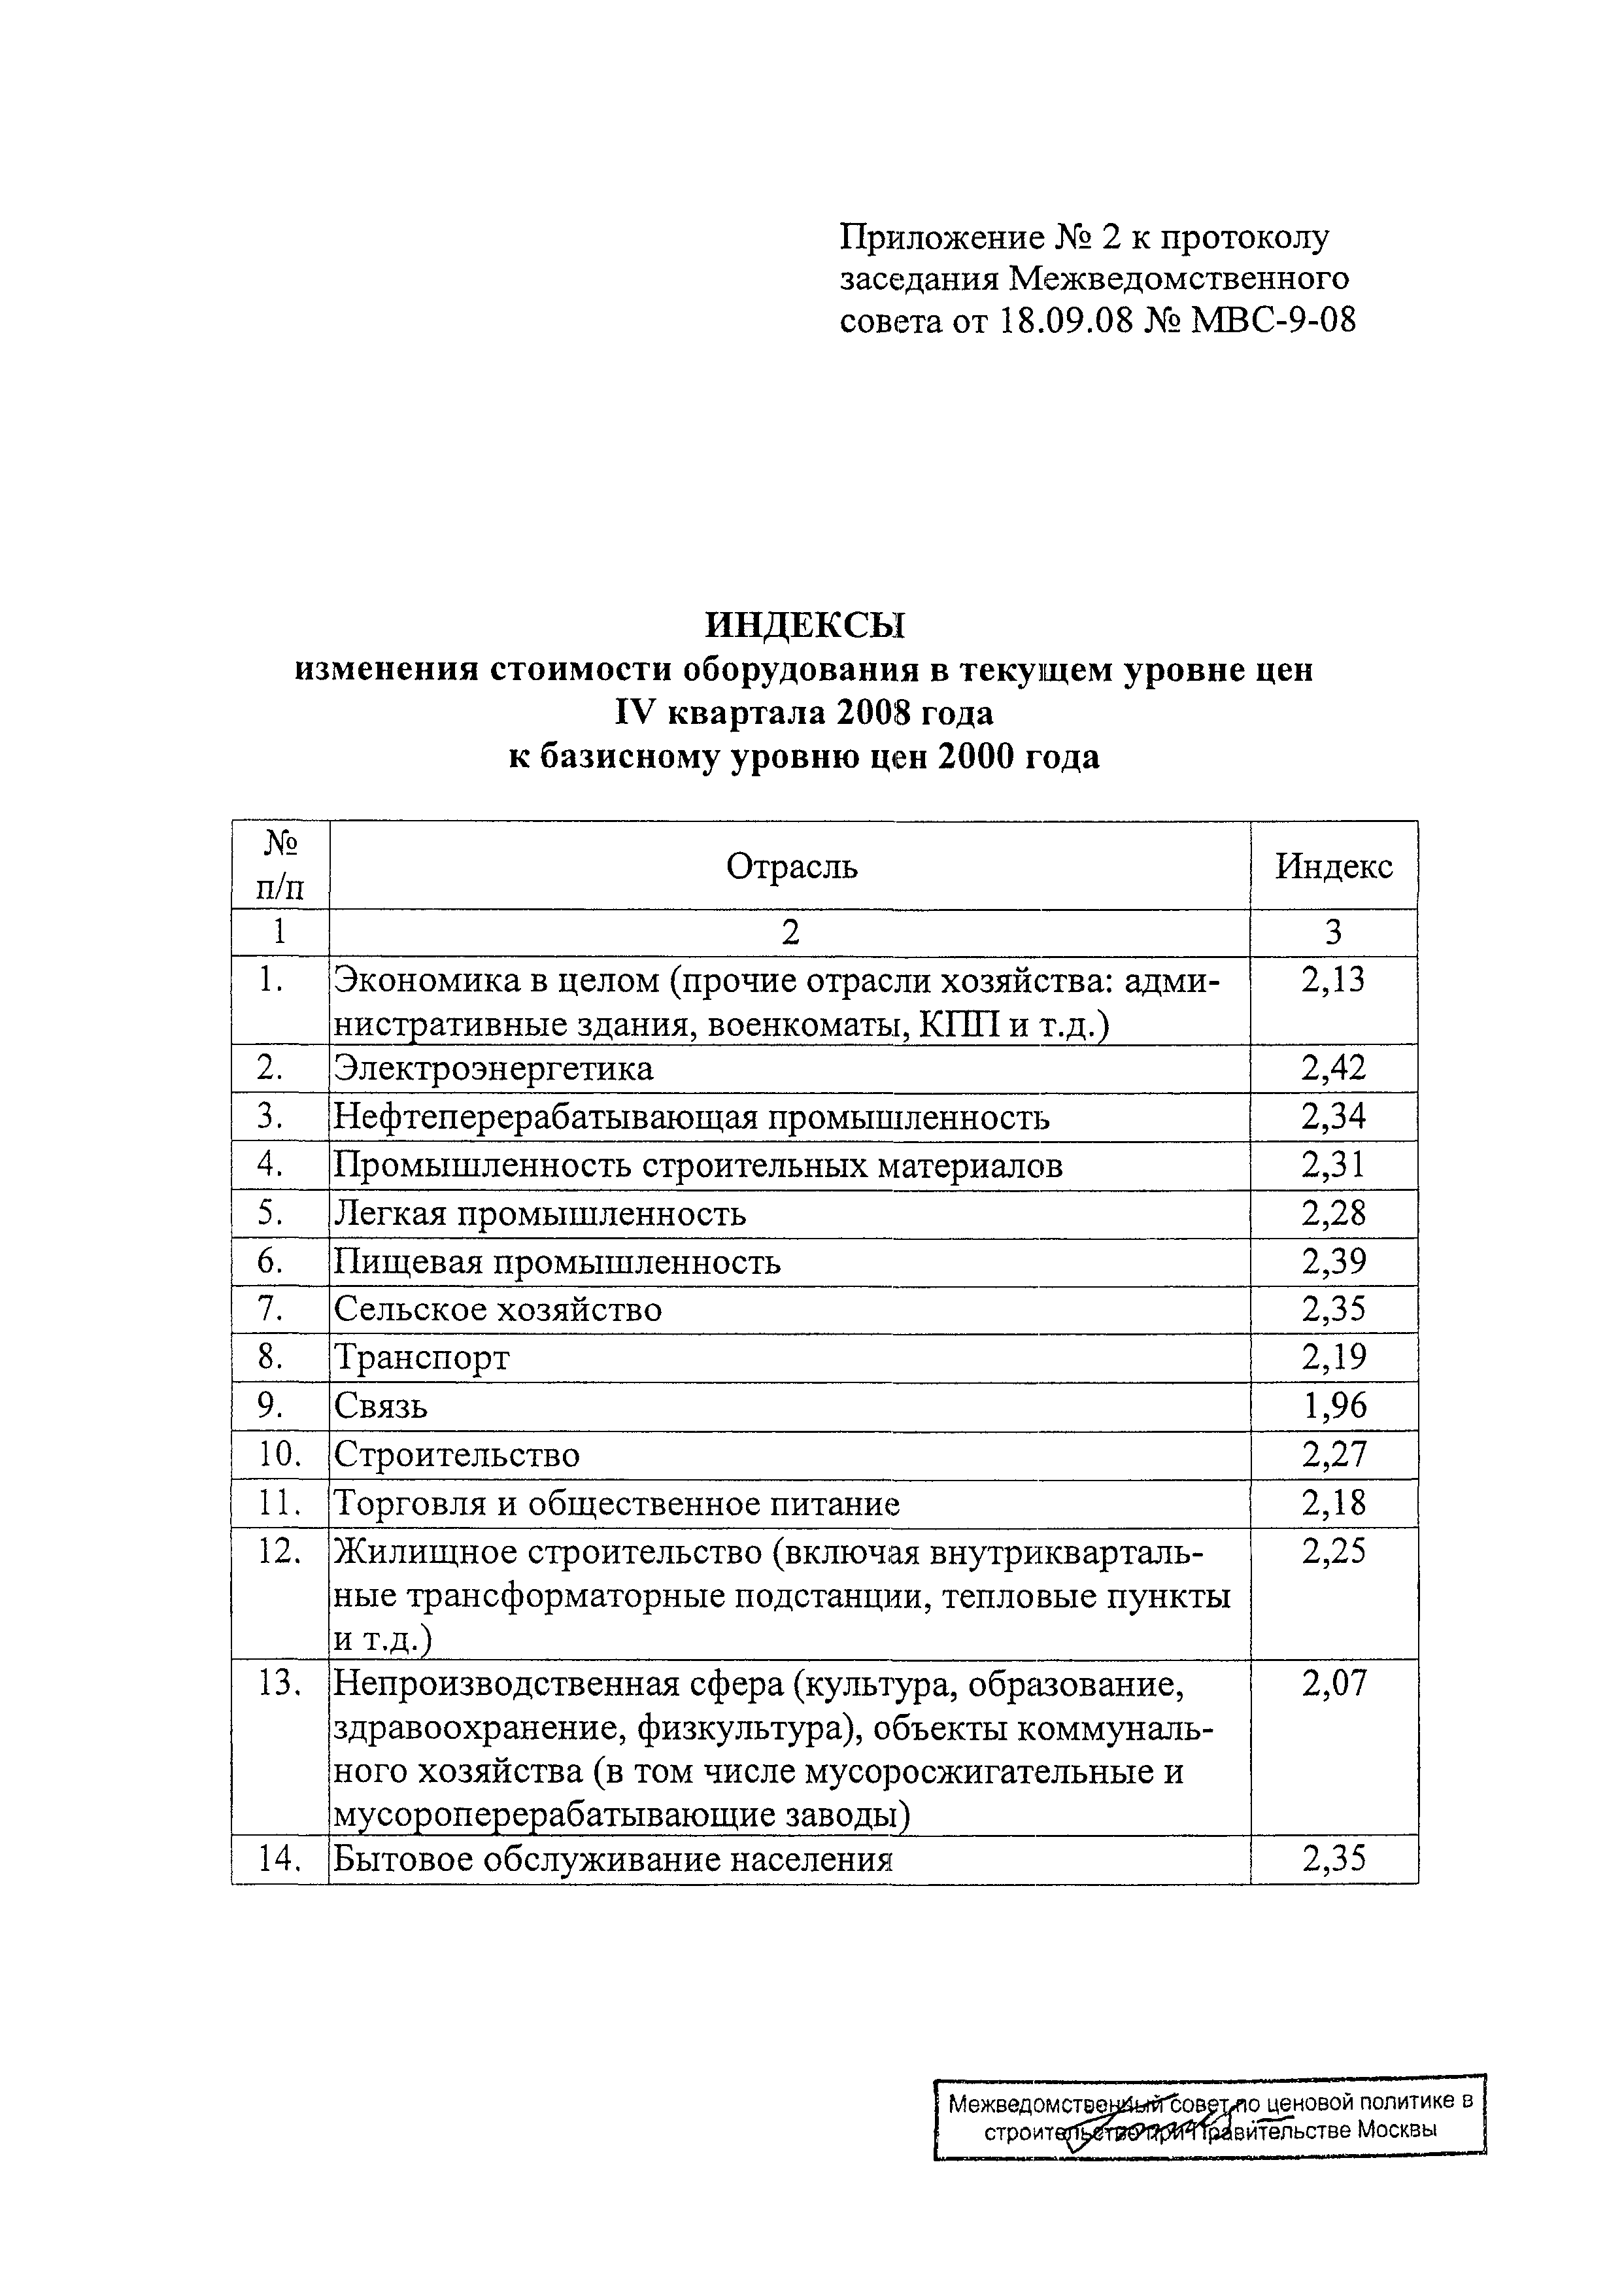 Протокол МВС-9-08